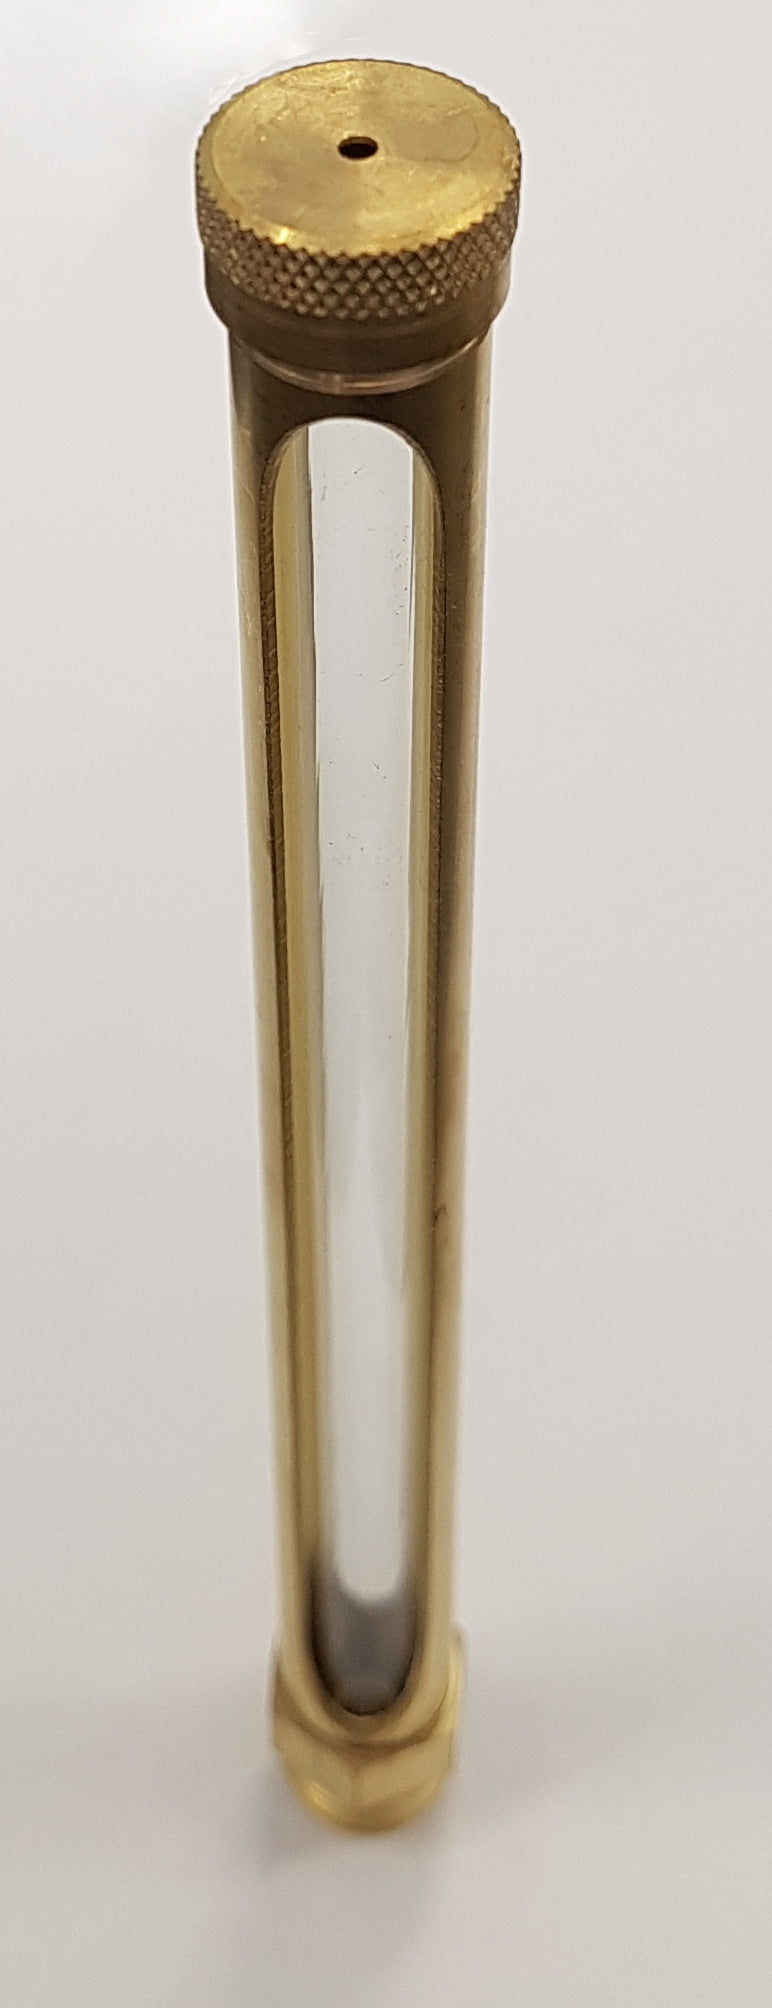 Brass straight oil position indicator type 226 - 80 x 1/4 BSP